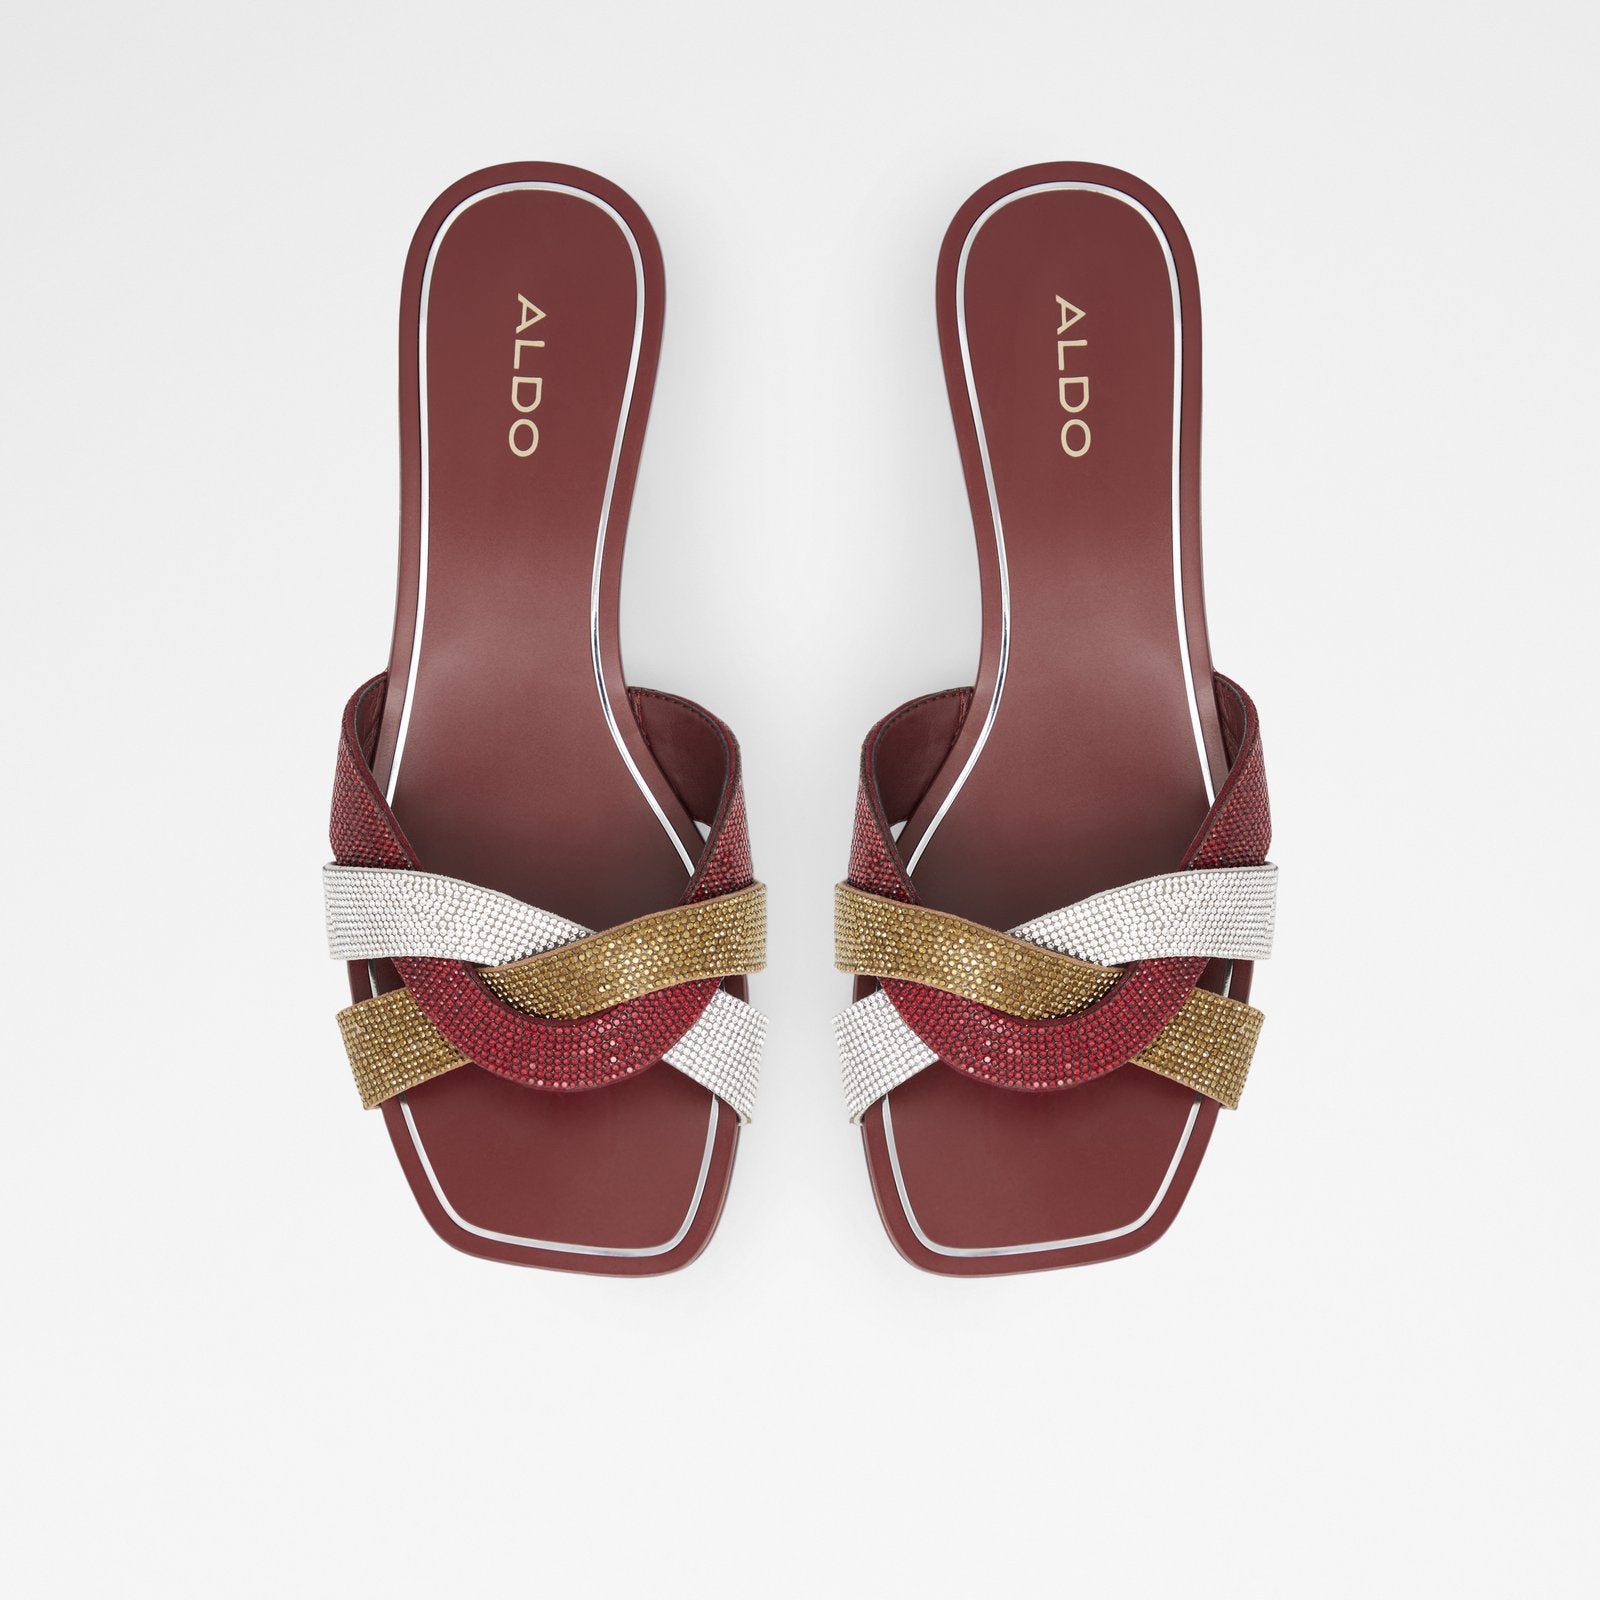 Coredith Women Shoes - Bordo - ALDO KSA